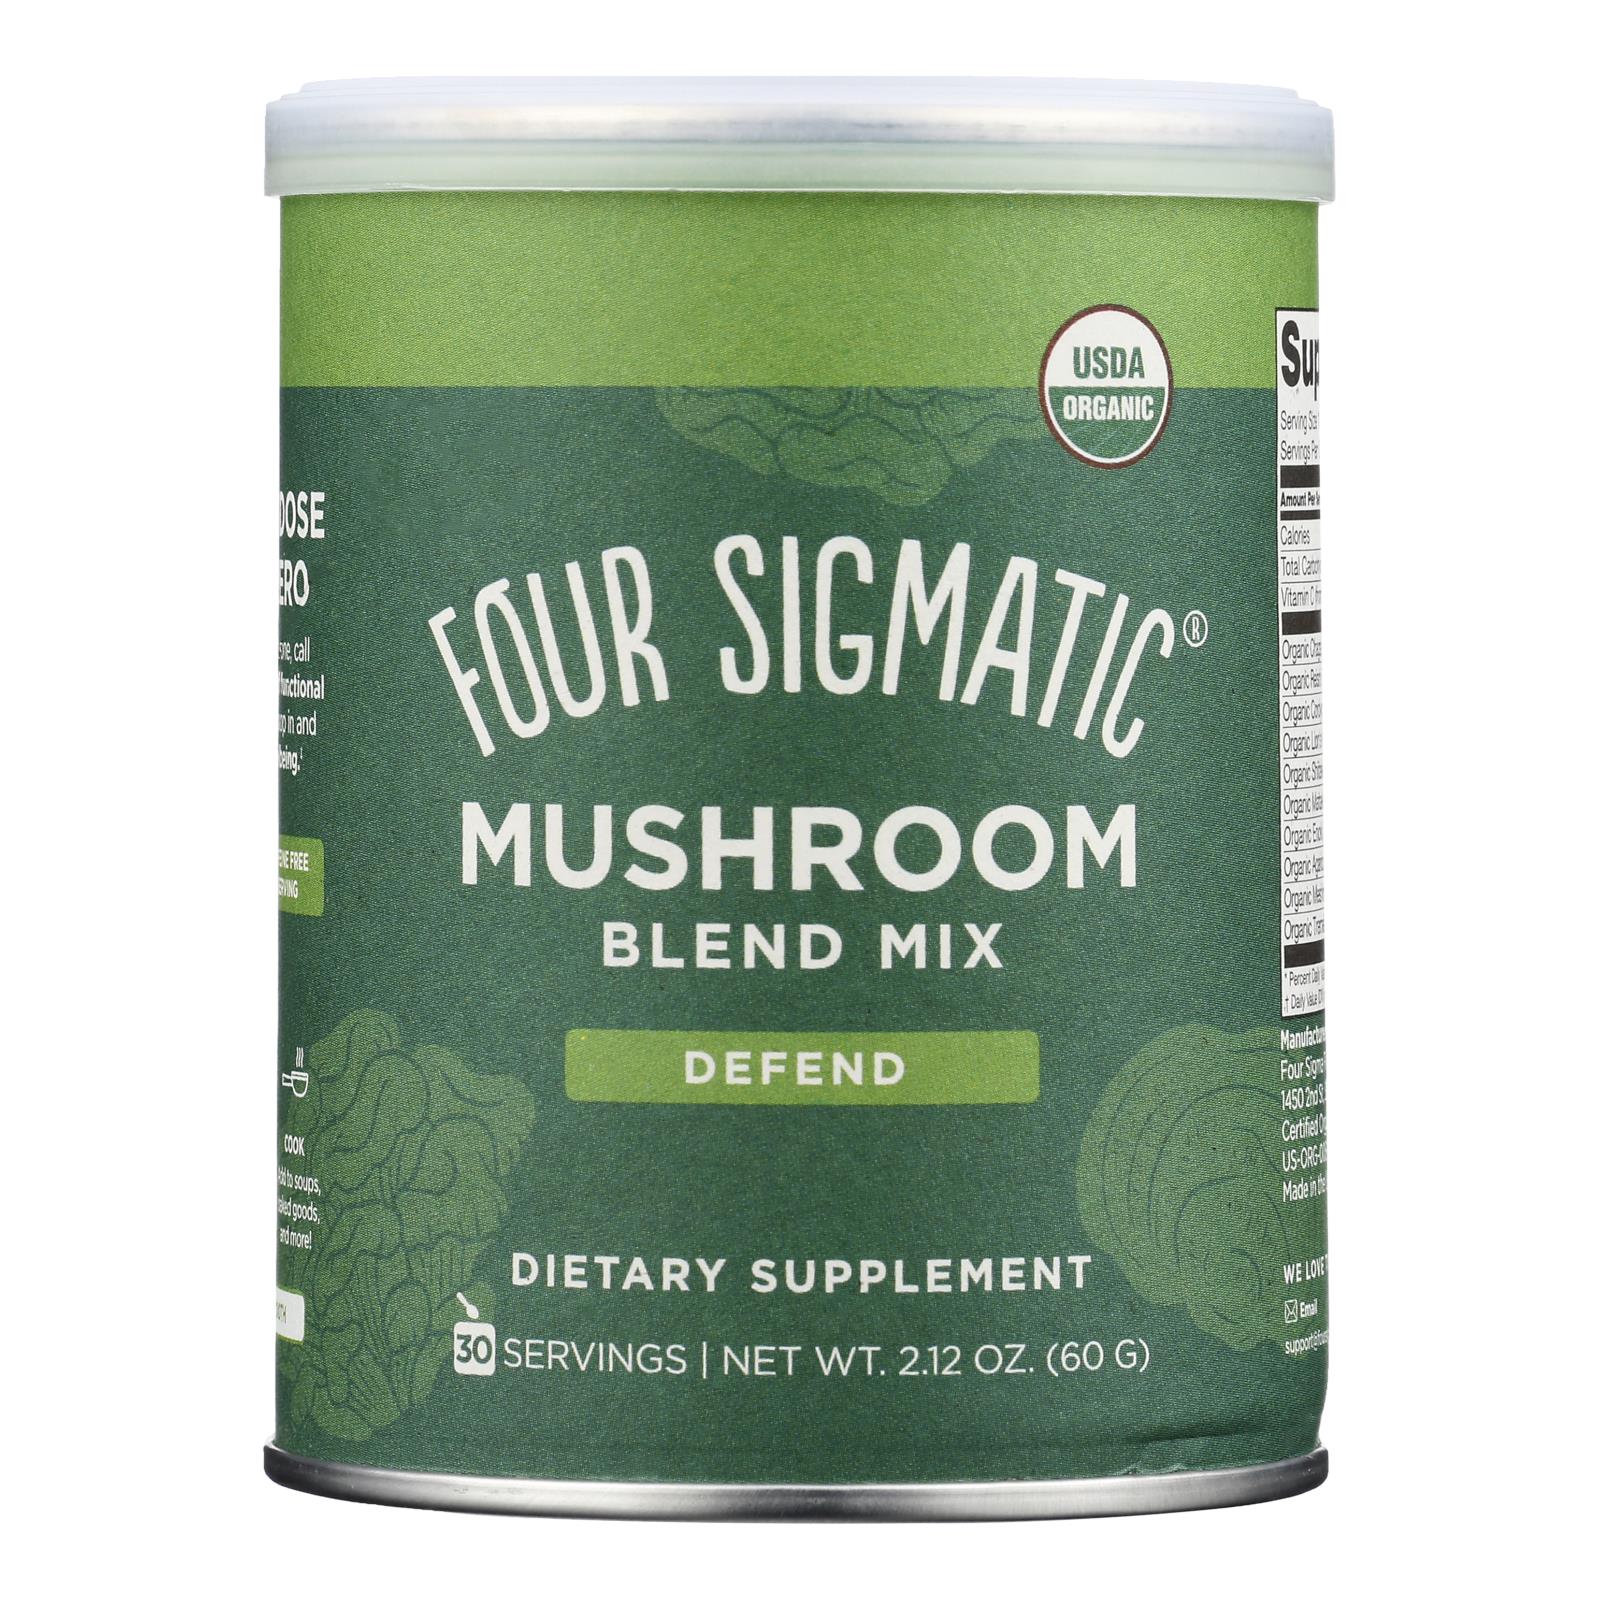 Four Sigmatic - 10 Mushroom Superfood Blend - 30 Ct